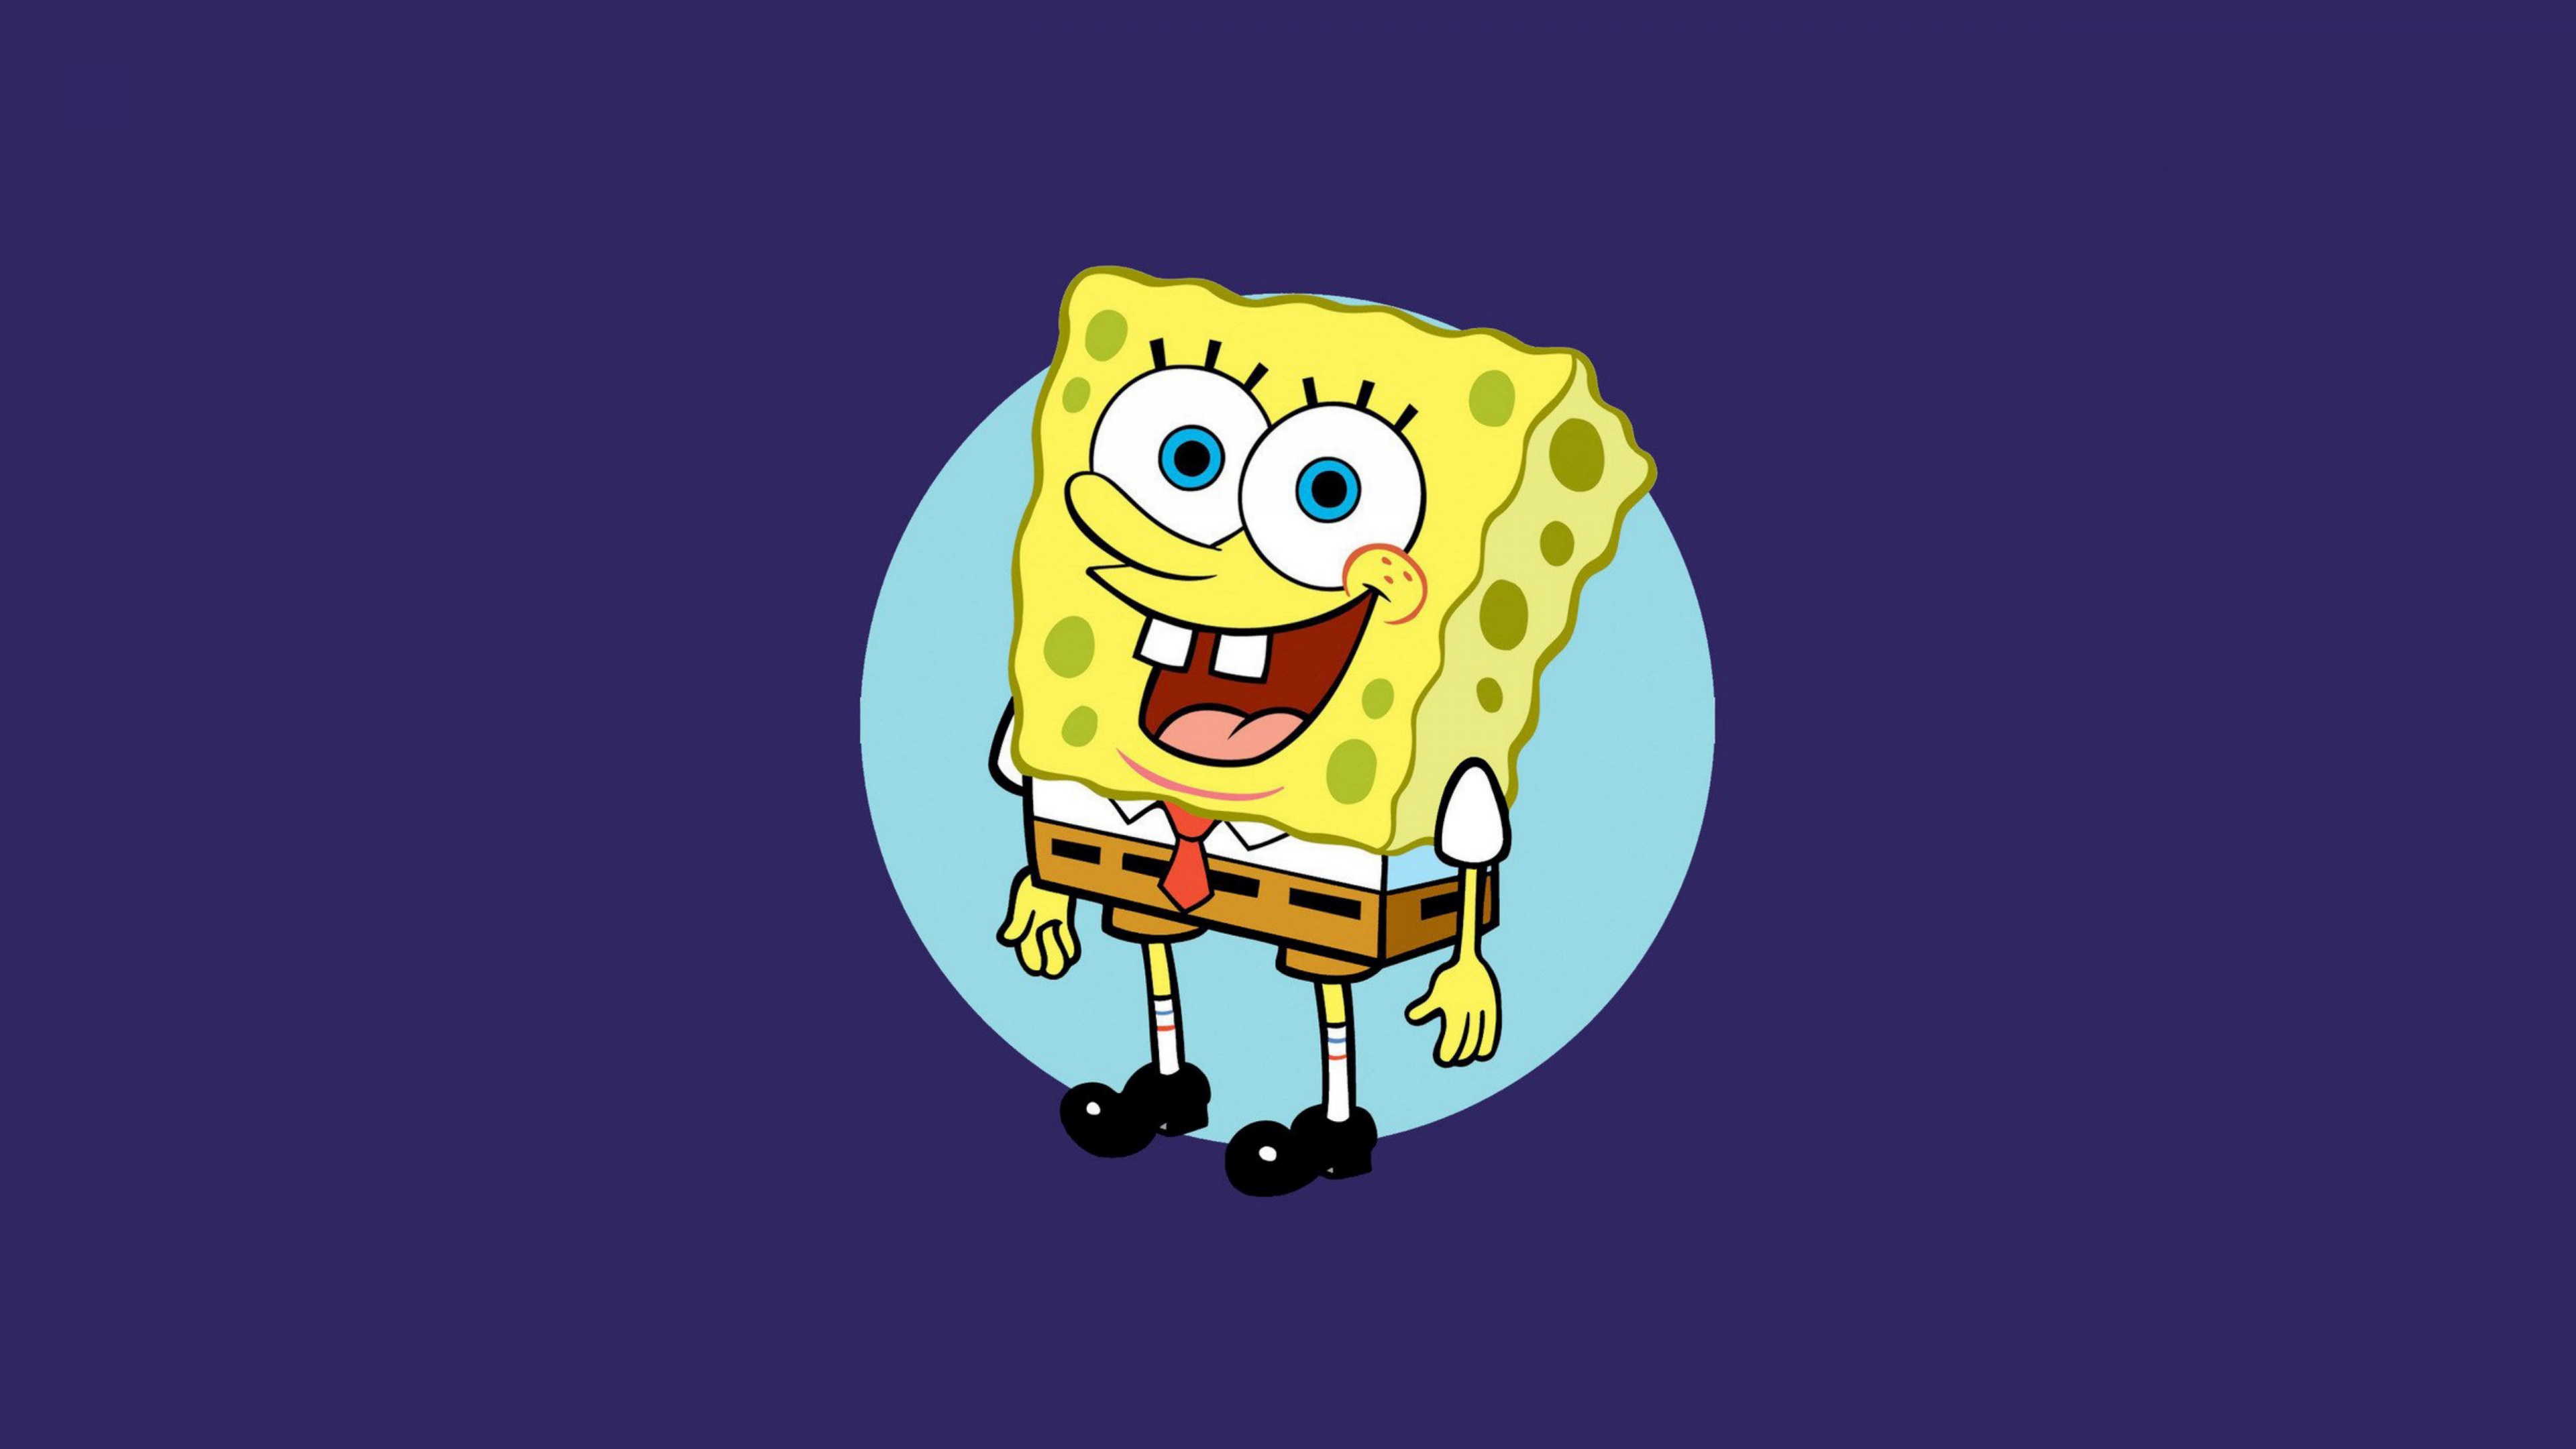 SpongeBob SquarePants is a popular animated television series - SpongeBob